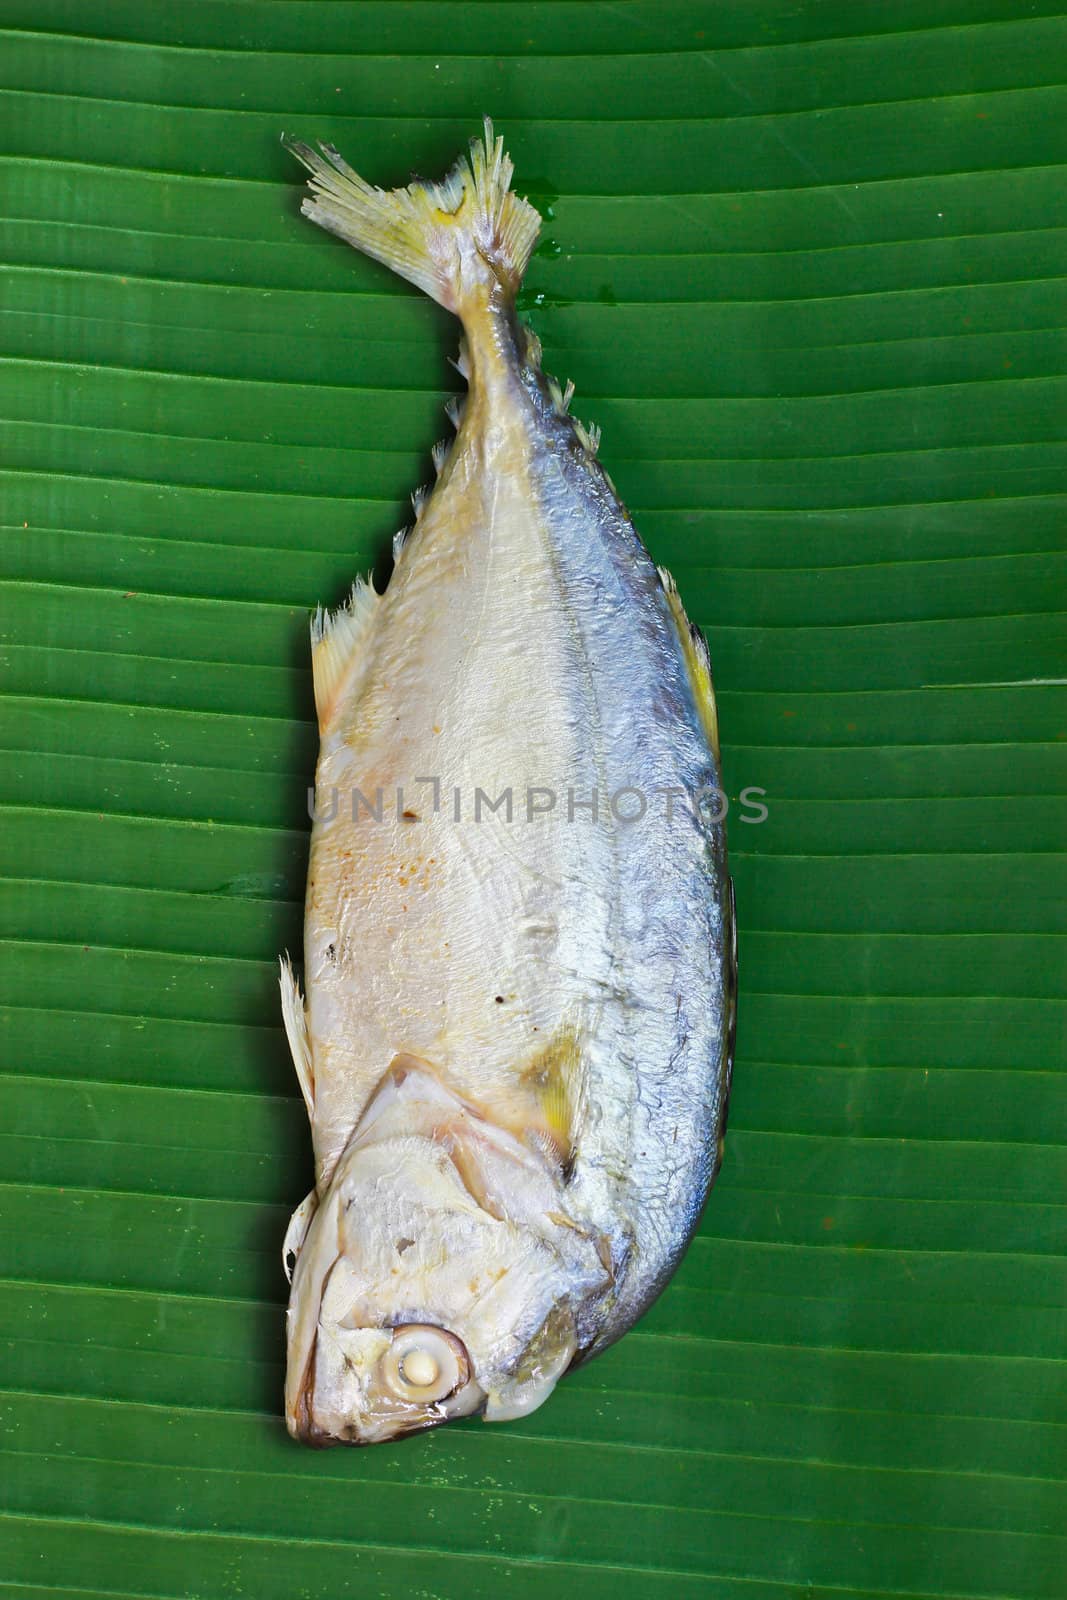 Chub mackerel on a banana leaf by bajita111122